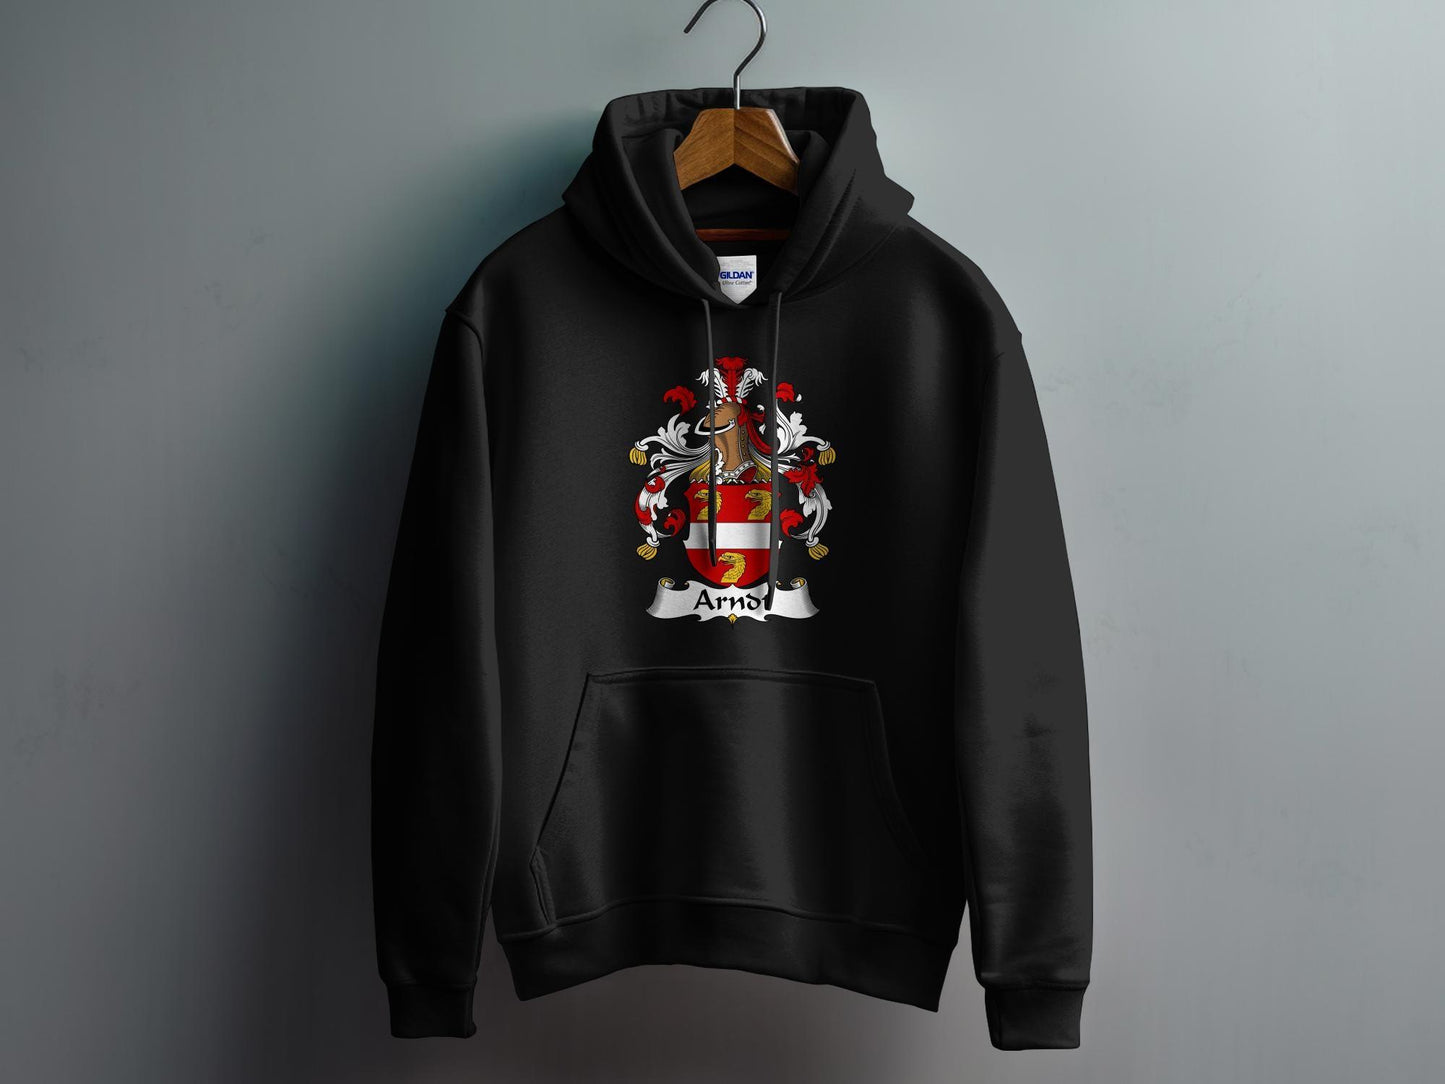 Custom Heraldic Lion Crest Tee, Arnot Family Sweatshirt, Unique Hoodie Design